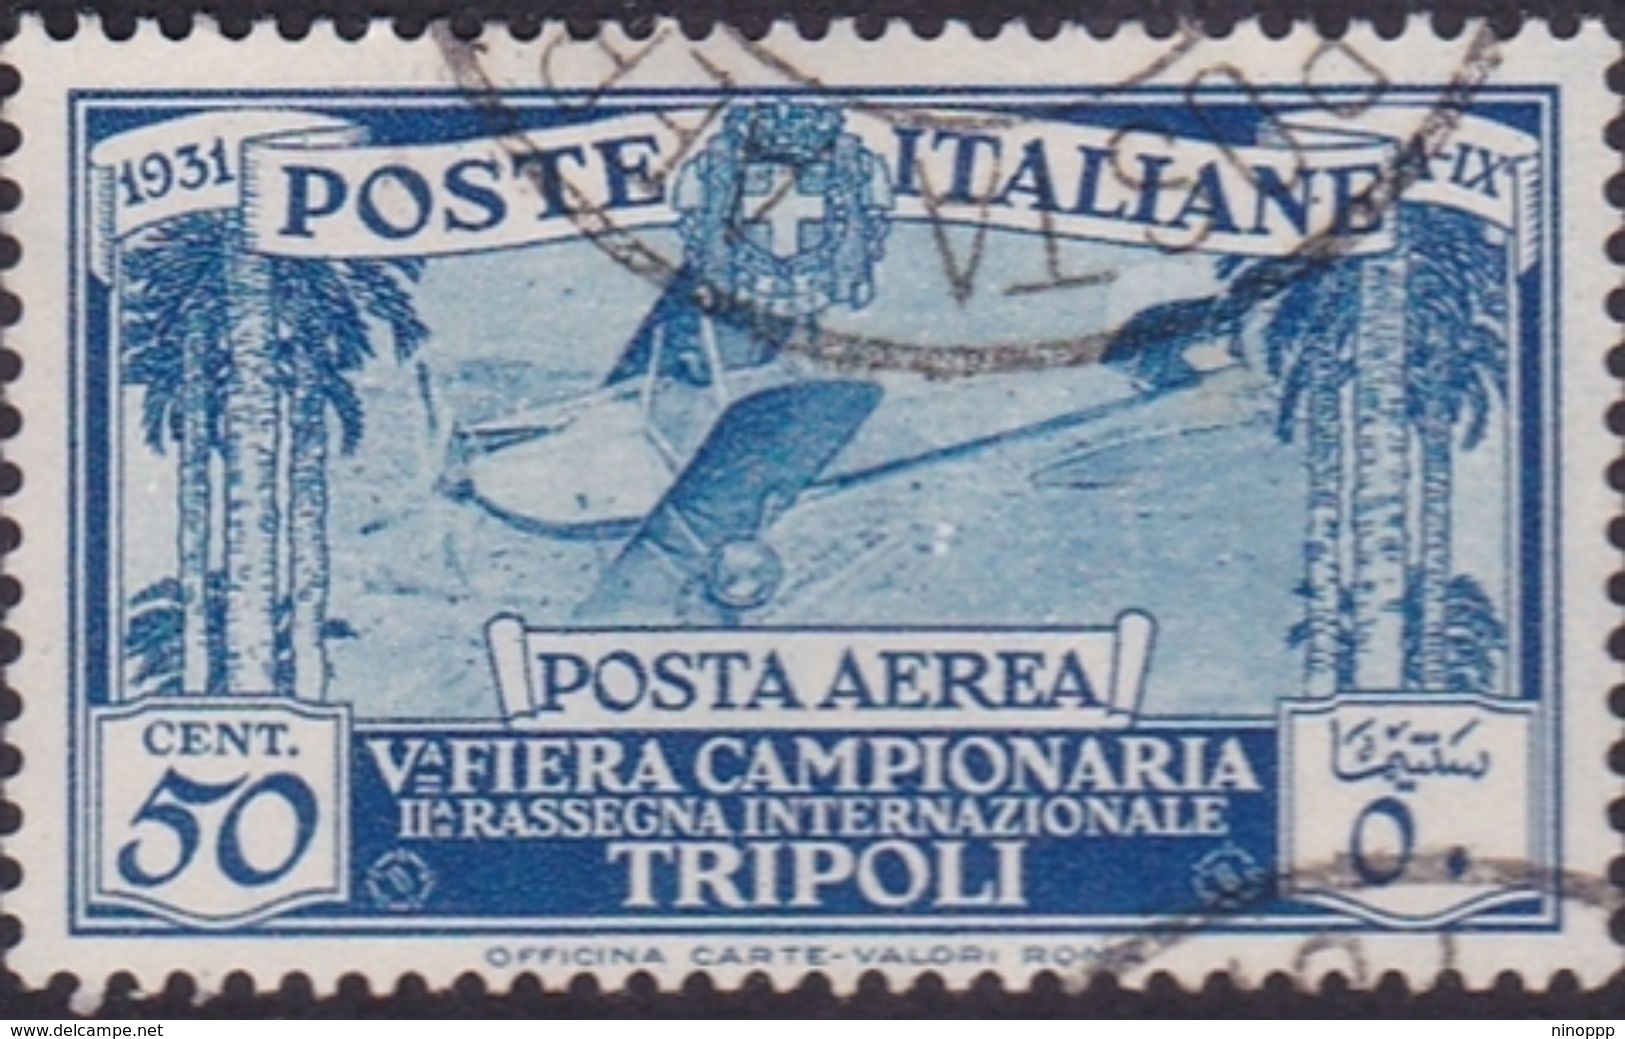 Italy-Colonies And Territories-Libya AP 3 1931 5th Tripoli Fair,used - Libya